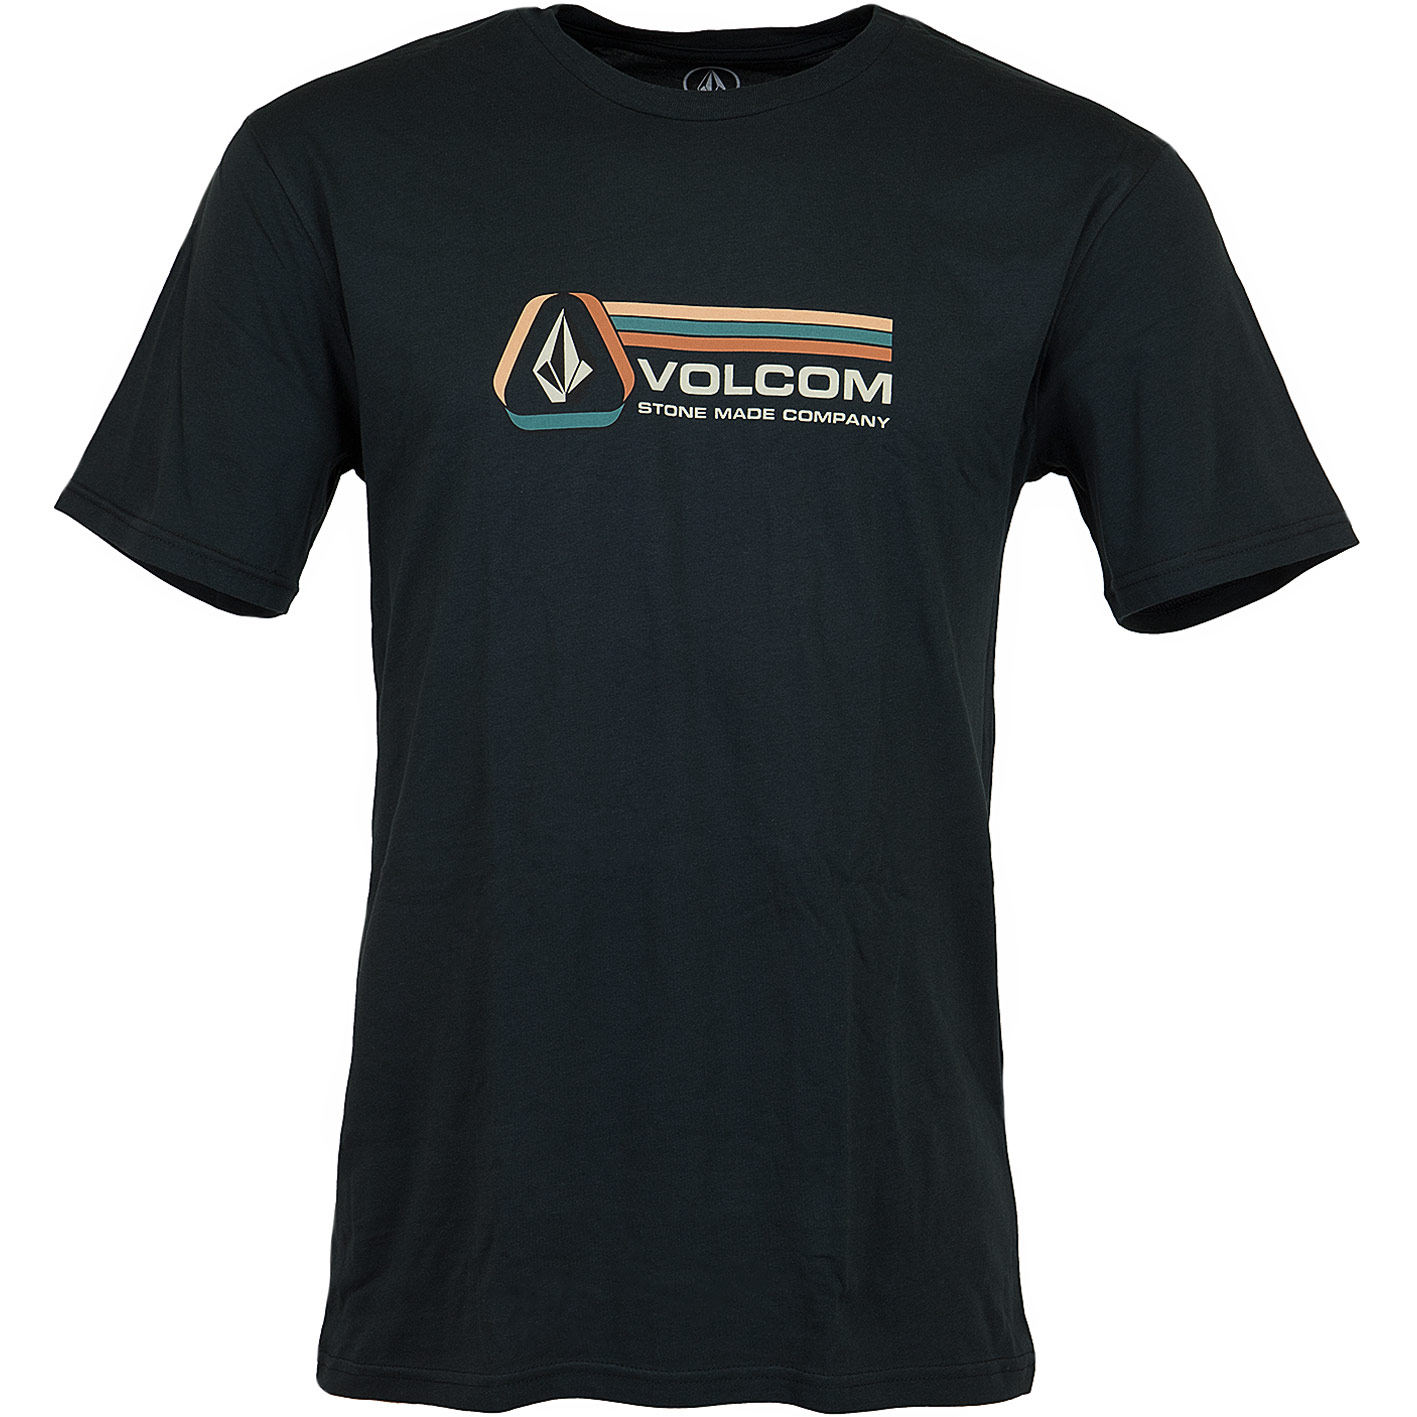  Volcom  T  Shirt  Descent schwarz hier bestellen 